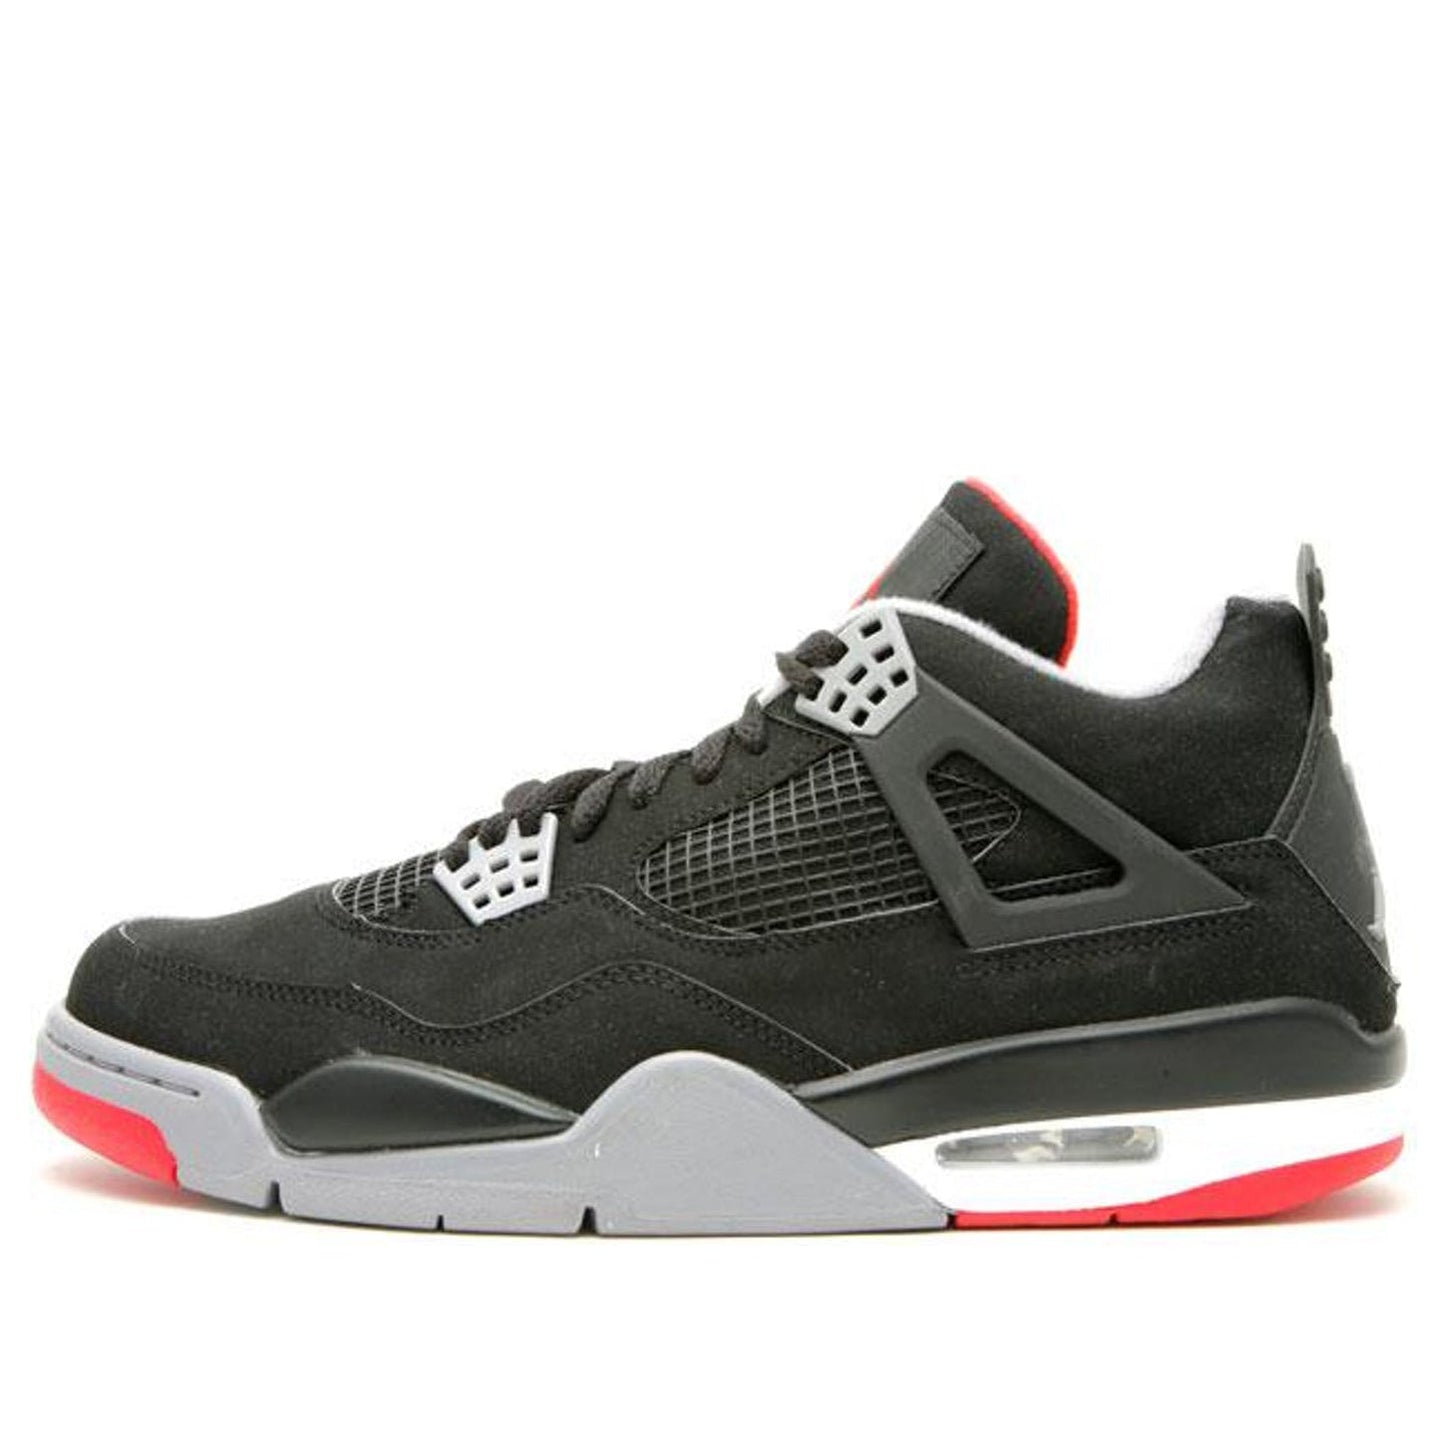 Air Jordan 4 Retro 'Countdown Pack' Black/Cement Grey-Fire Red 308497-003